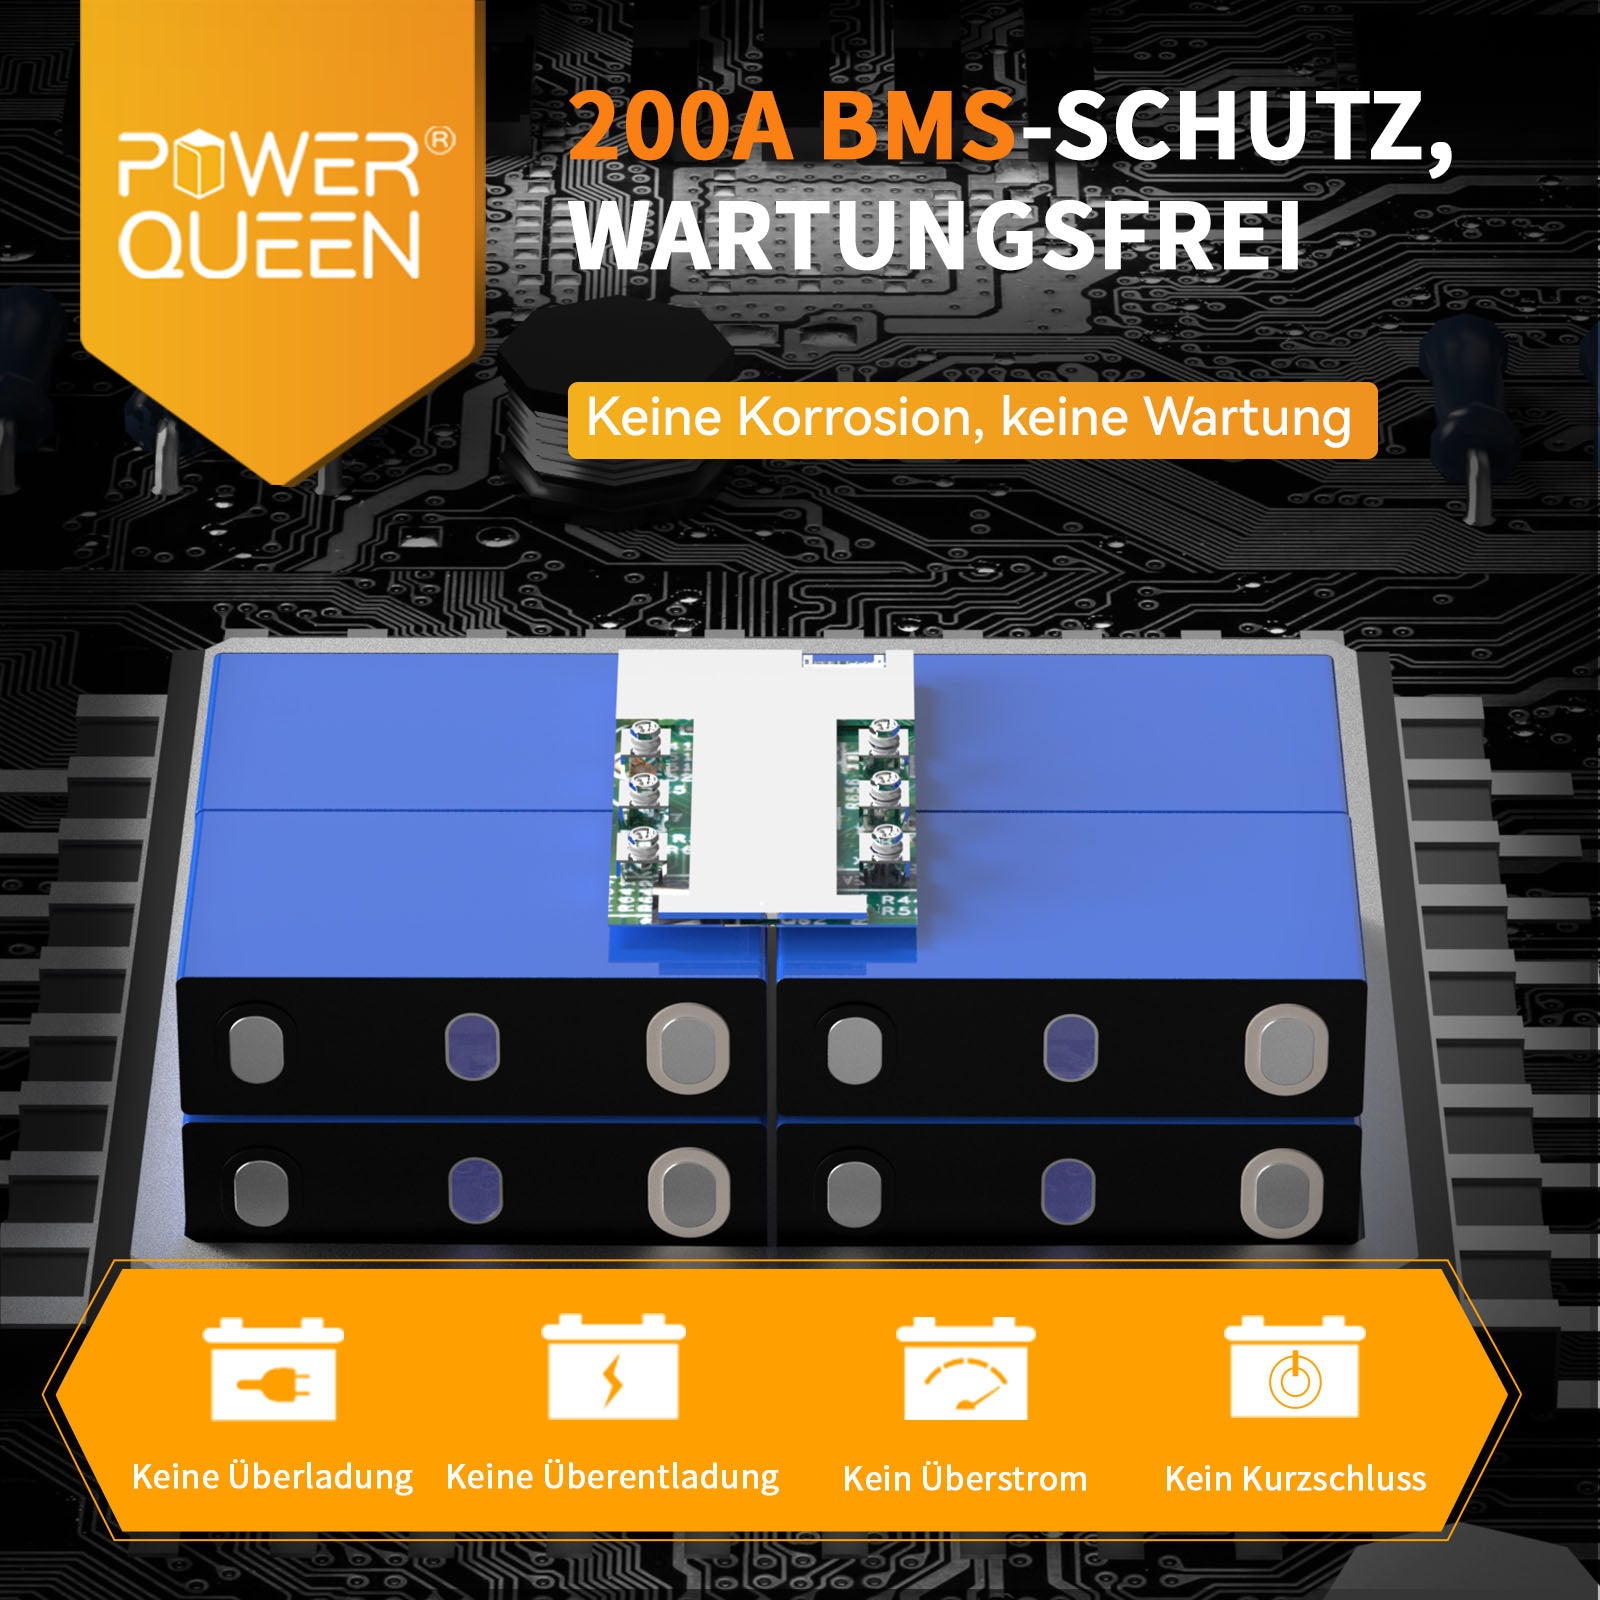 【0% BTW】Power Queen 12,8 V 300 Ah LiFePO4-batterij, geïntegreerd 200 A BMS